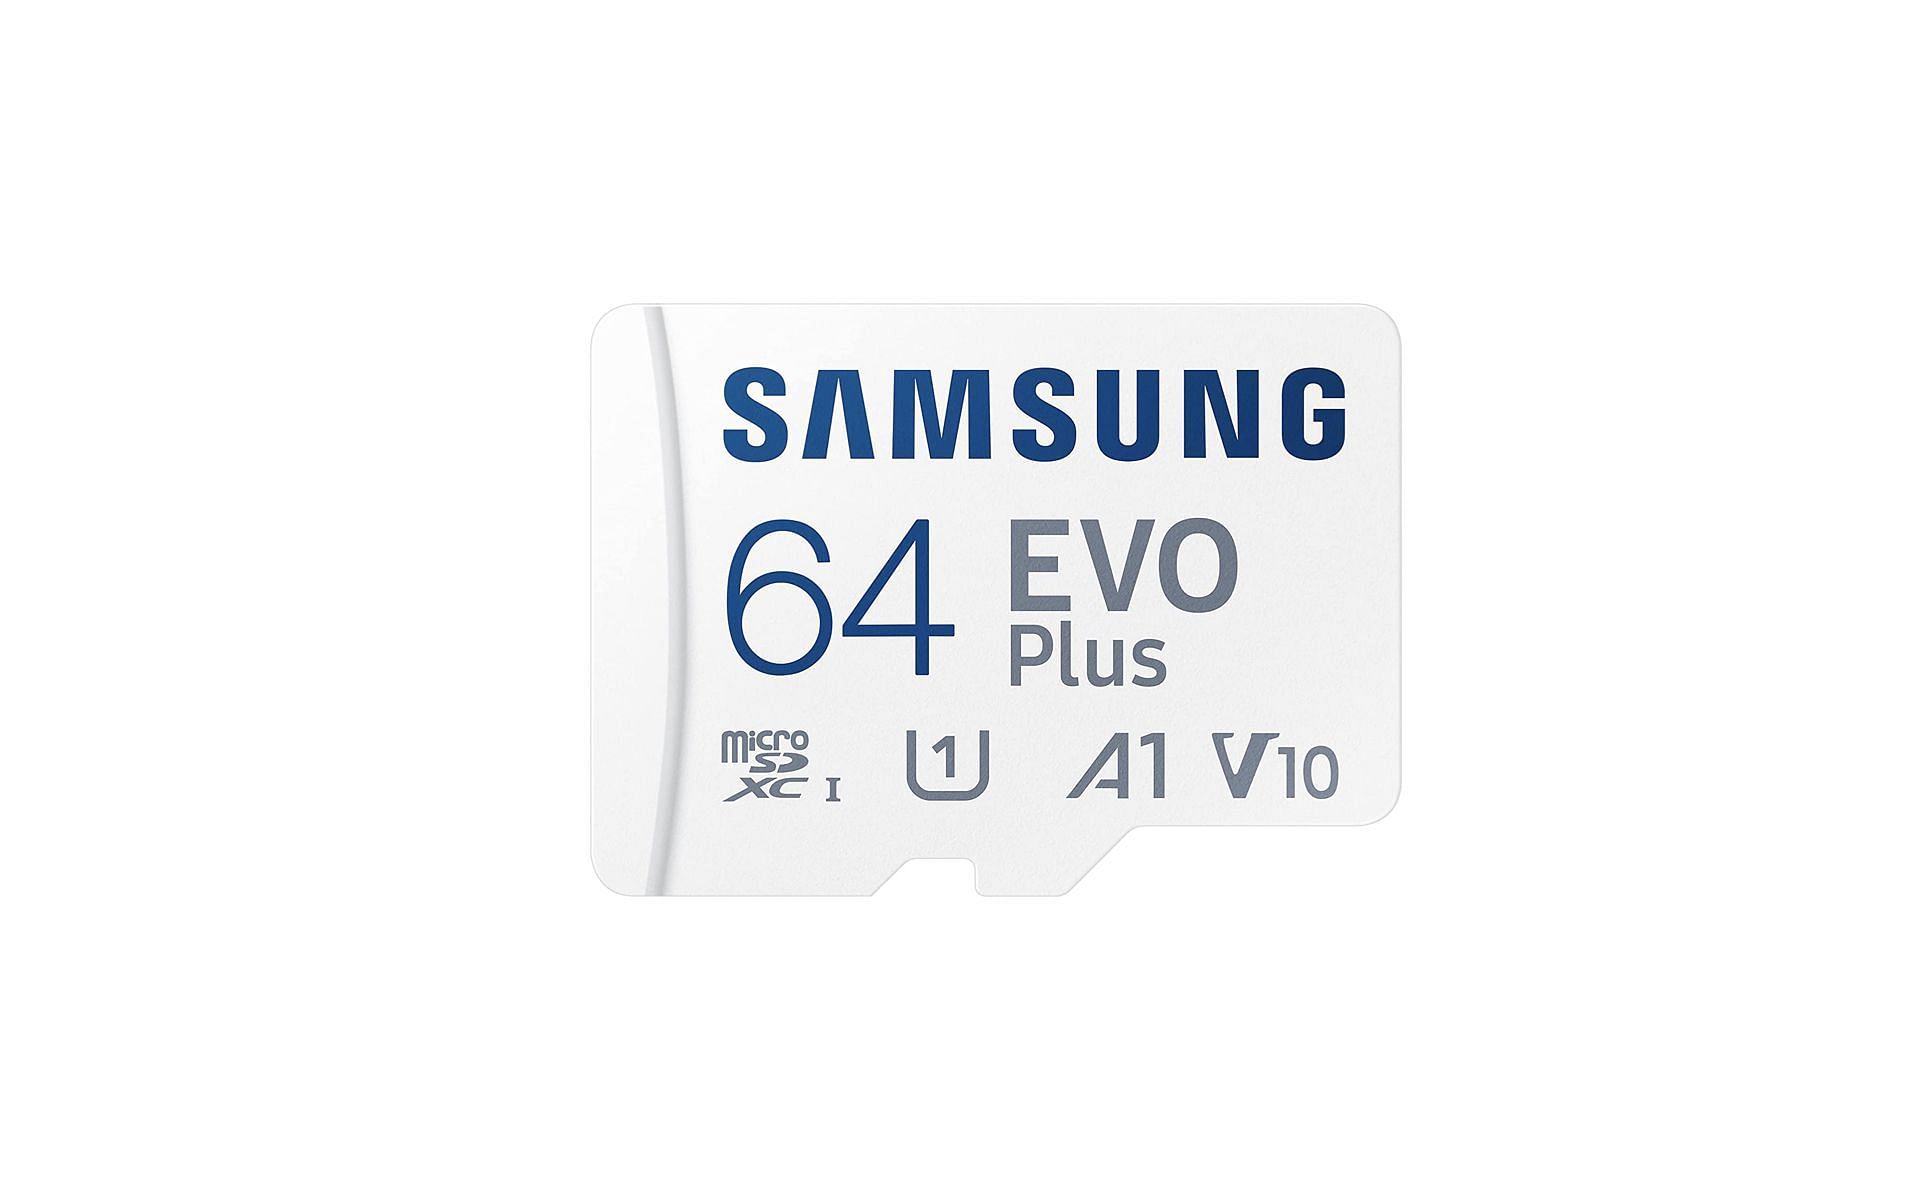 Samsung Evo Plus (Image via Amazon)